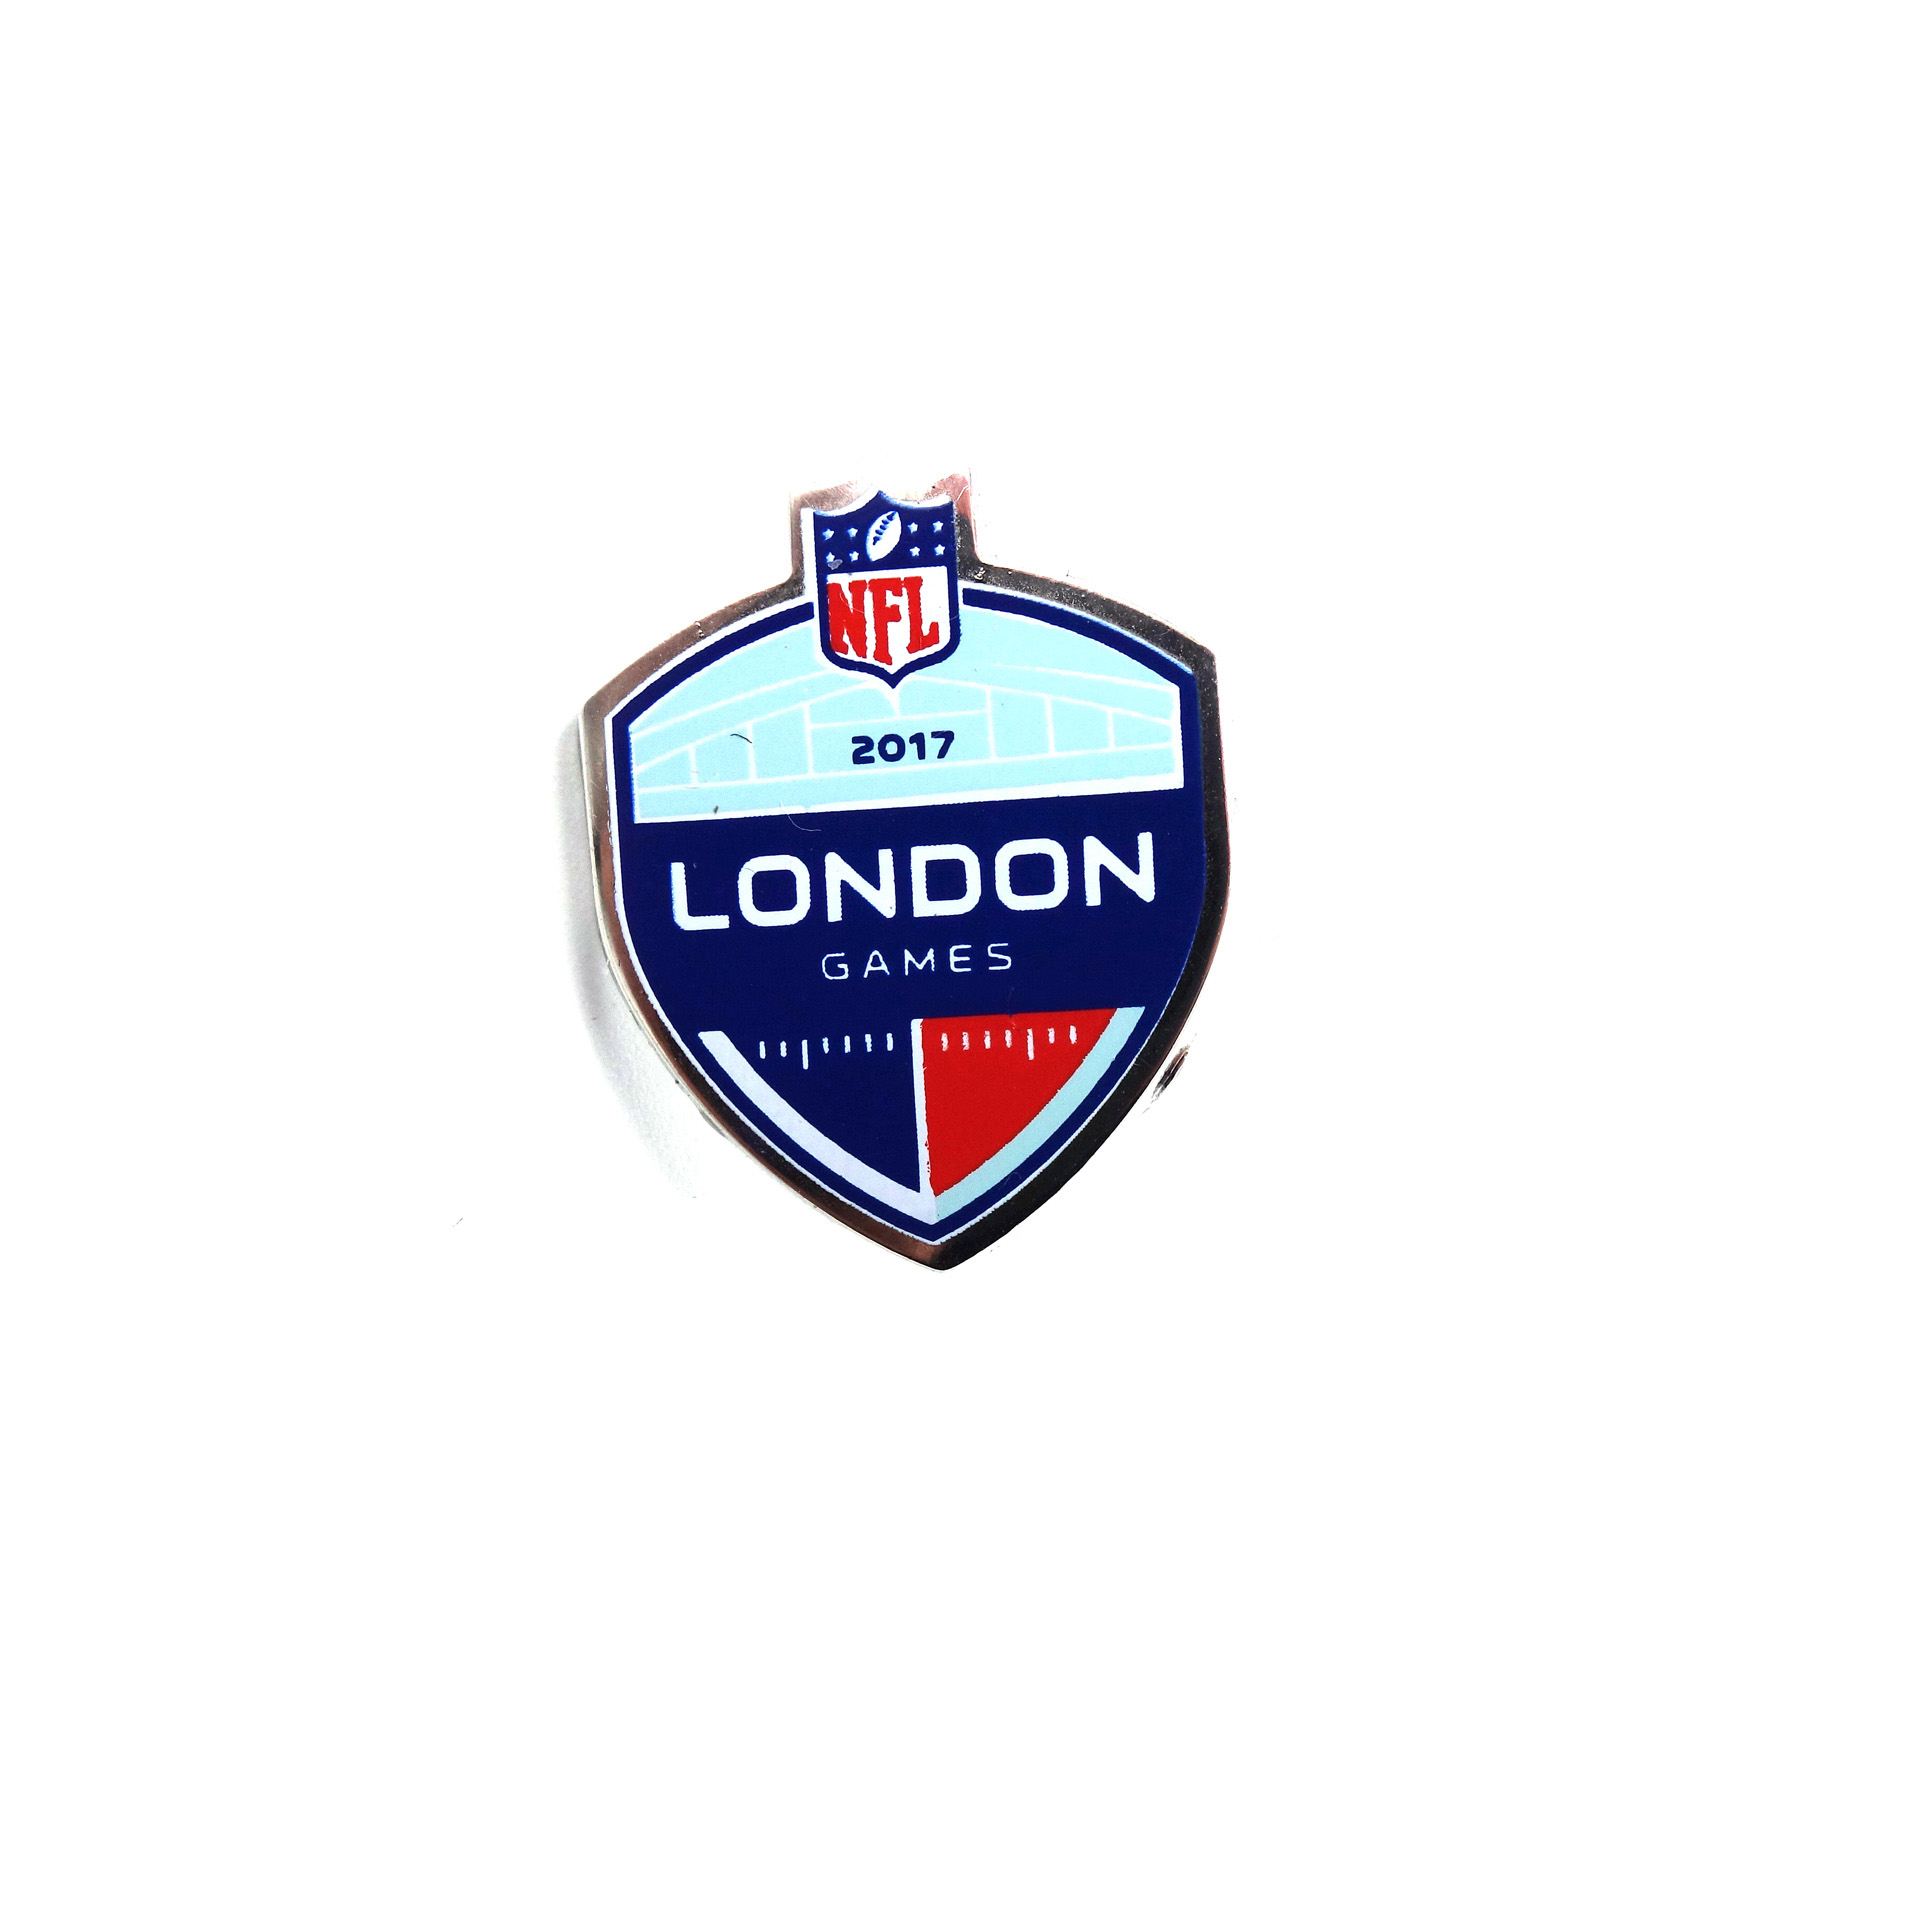 NFL London Games 2017 Pin